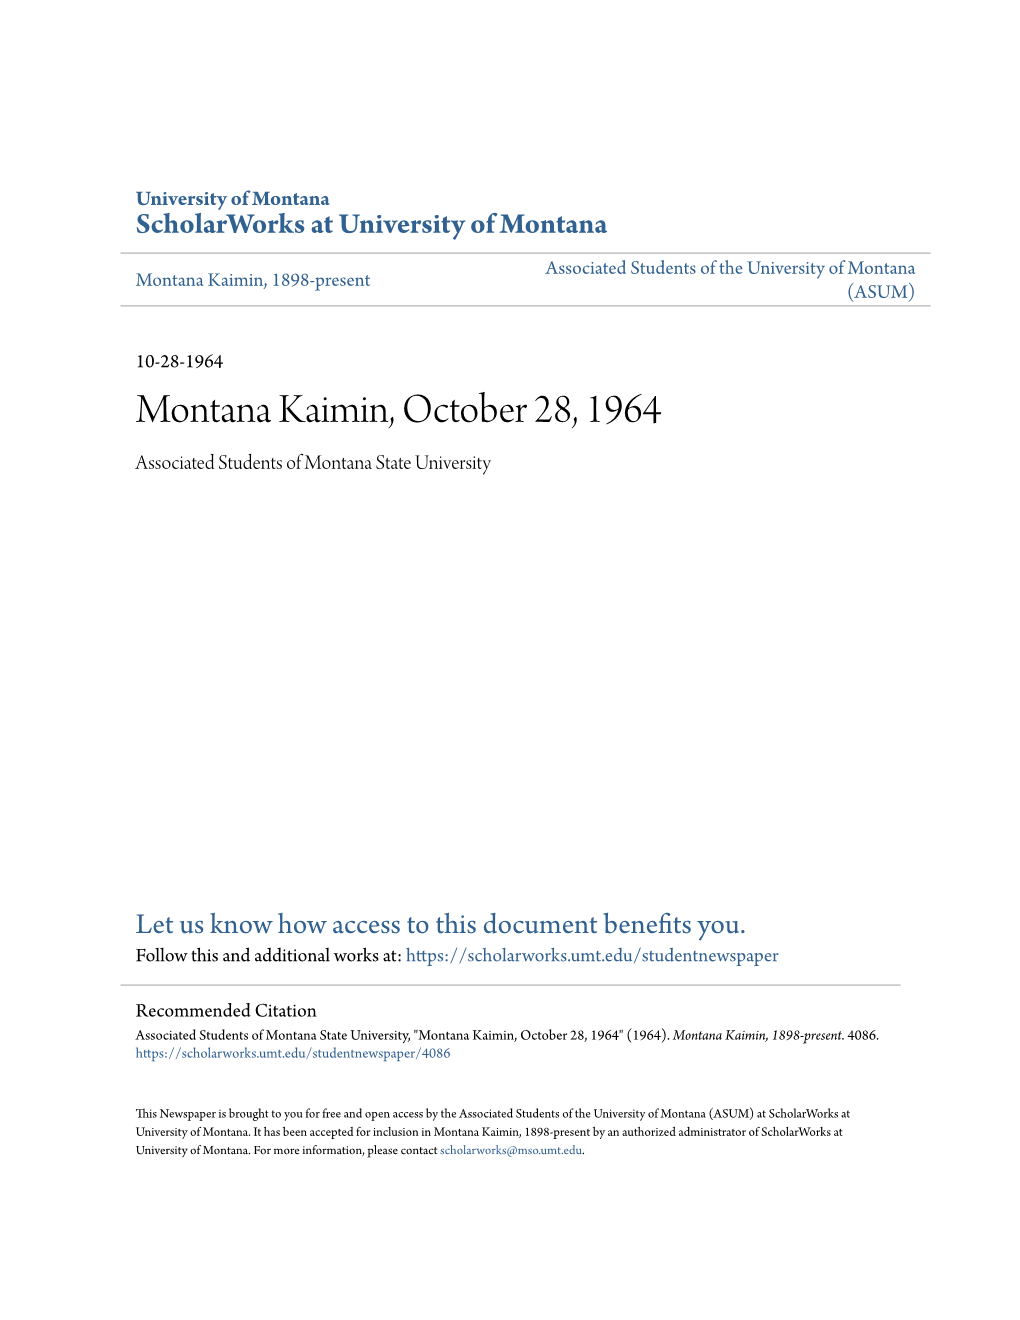 Montana Kaimin, October 28, 1964 Associated Students of Montana State University